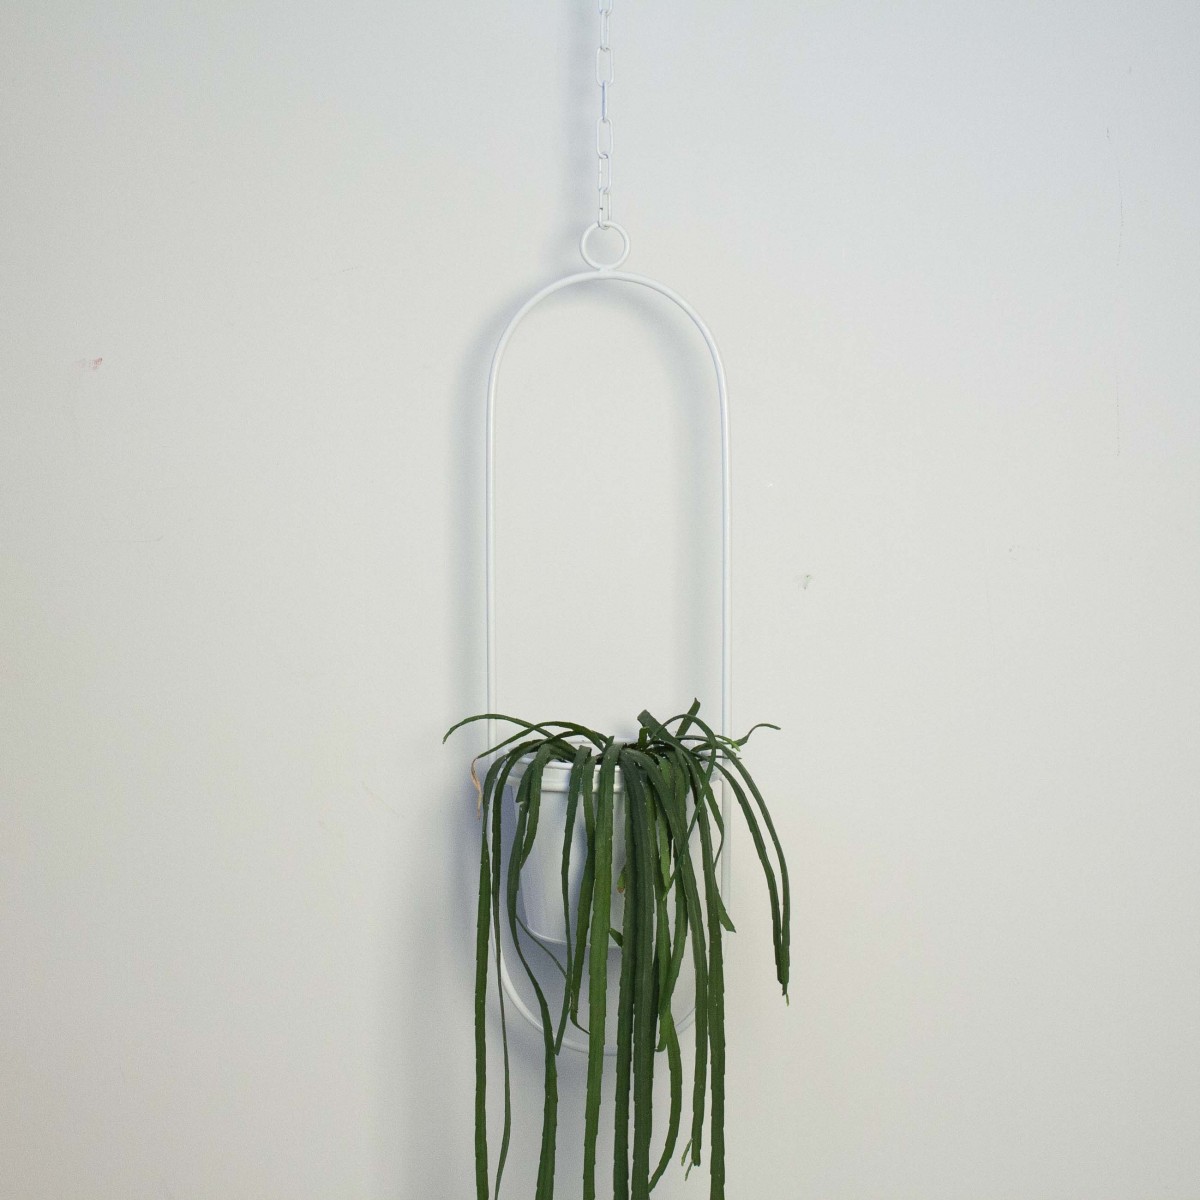 adorist - Hängetopf, Dekoring mit Blumentopf "Hanging Garden" Oval, weiß